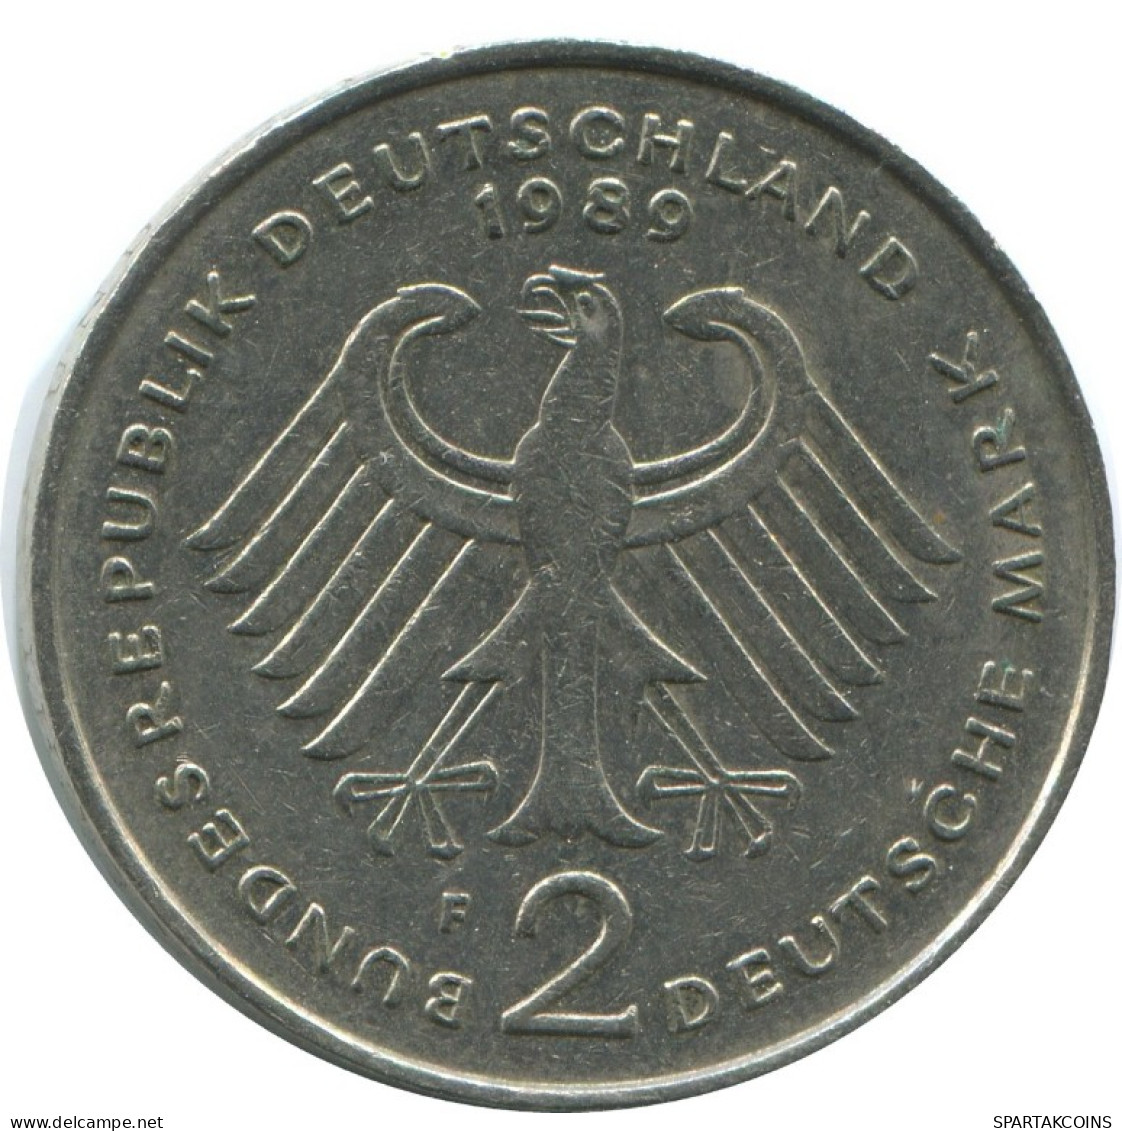 2 DM 1989 F K.SCHUMACHER WEST & UNIFIED GERMANY Coin #AG250.3.U.A - 2 Mark